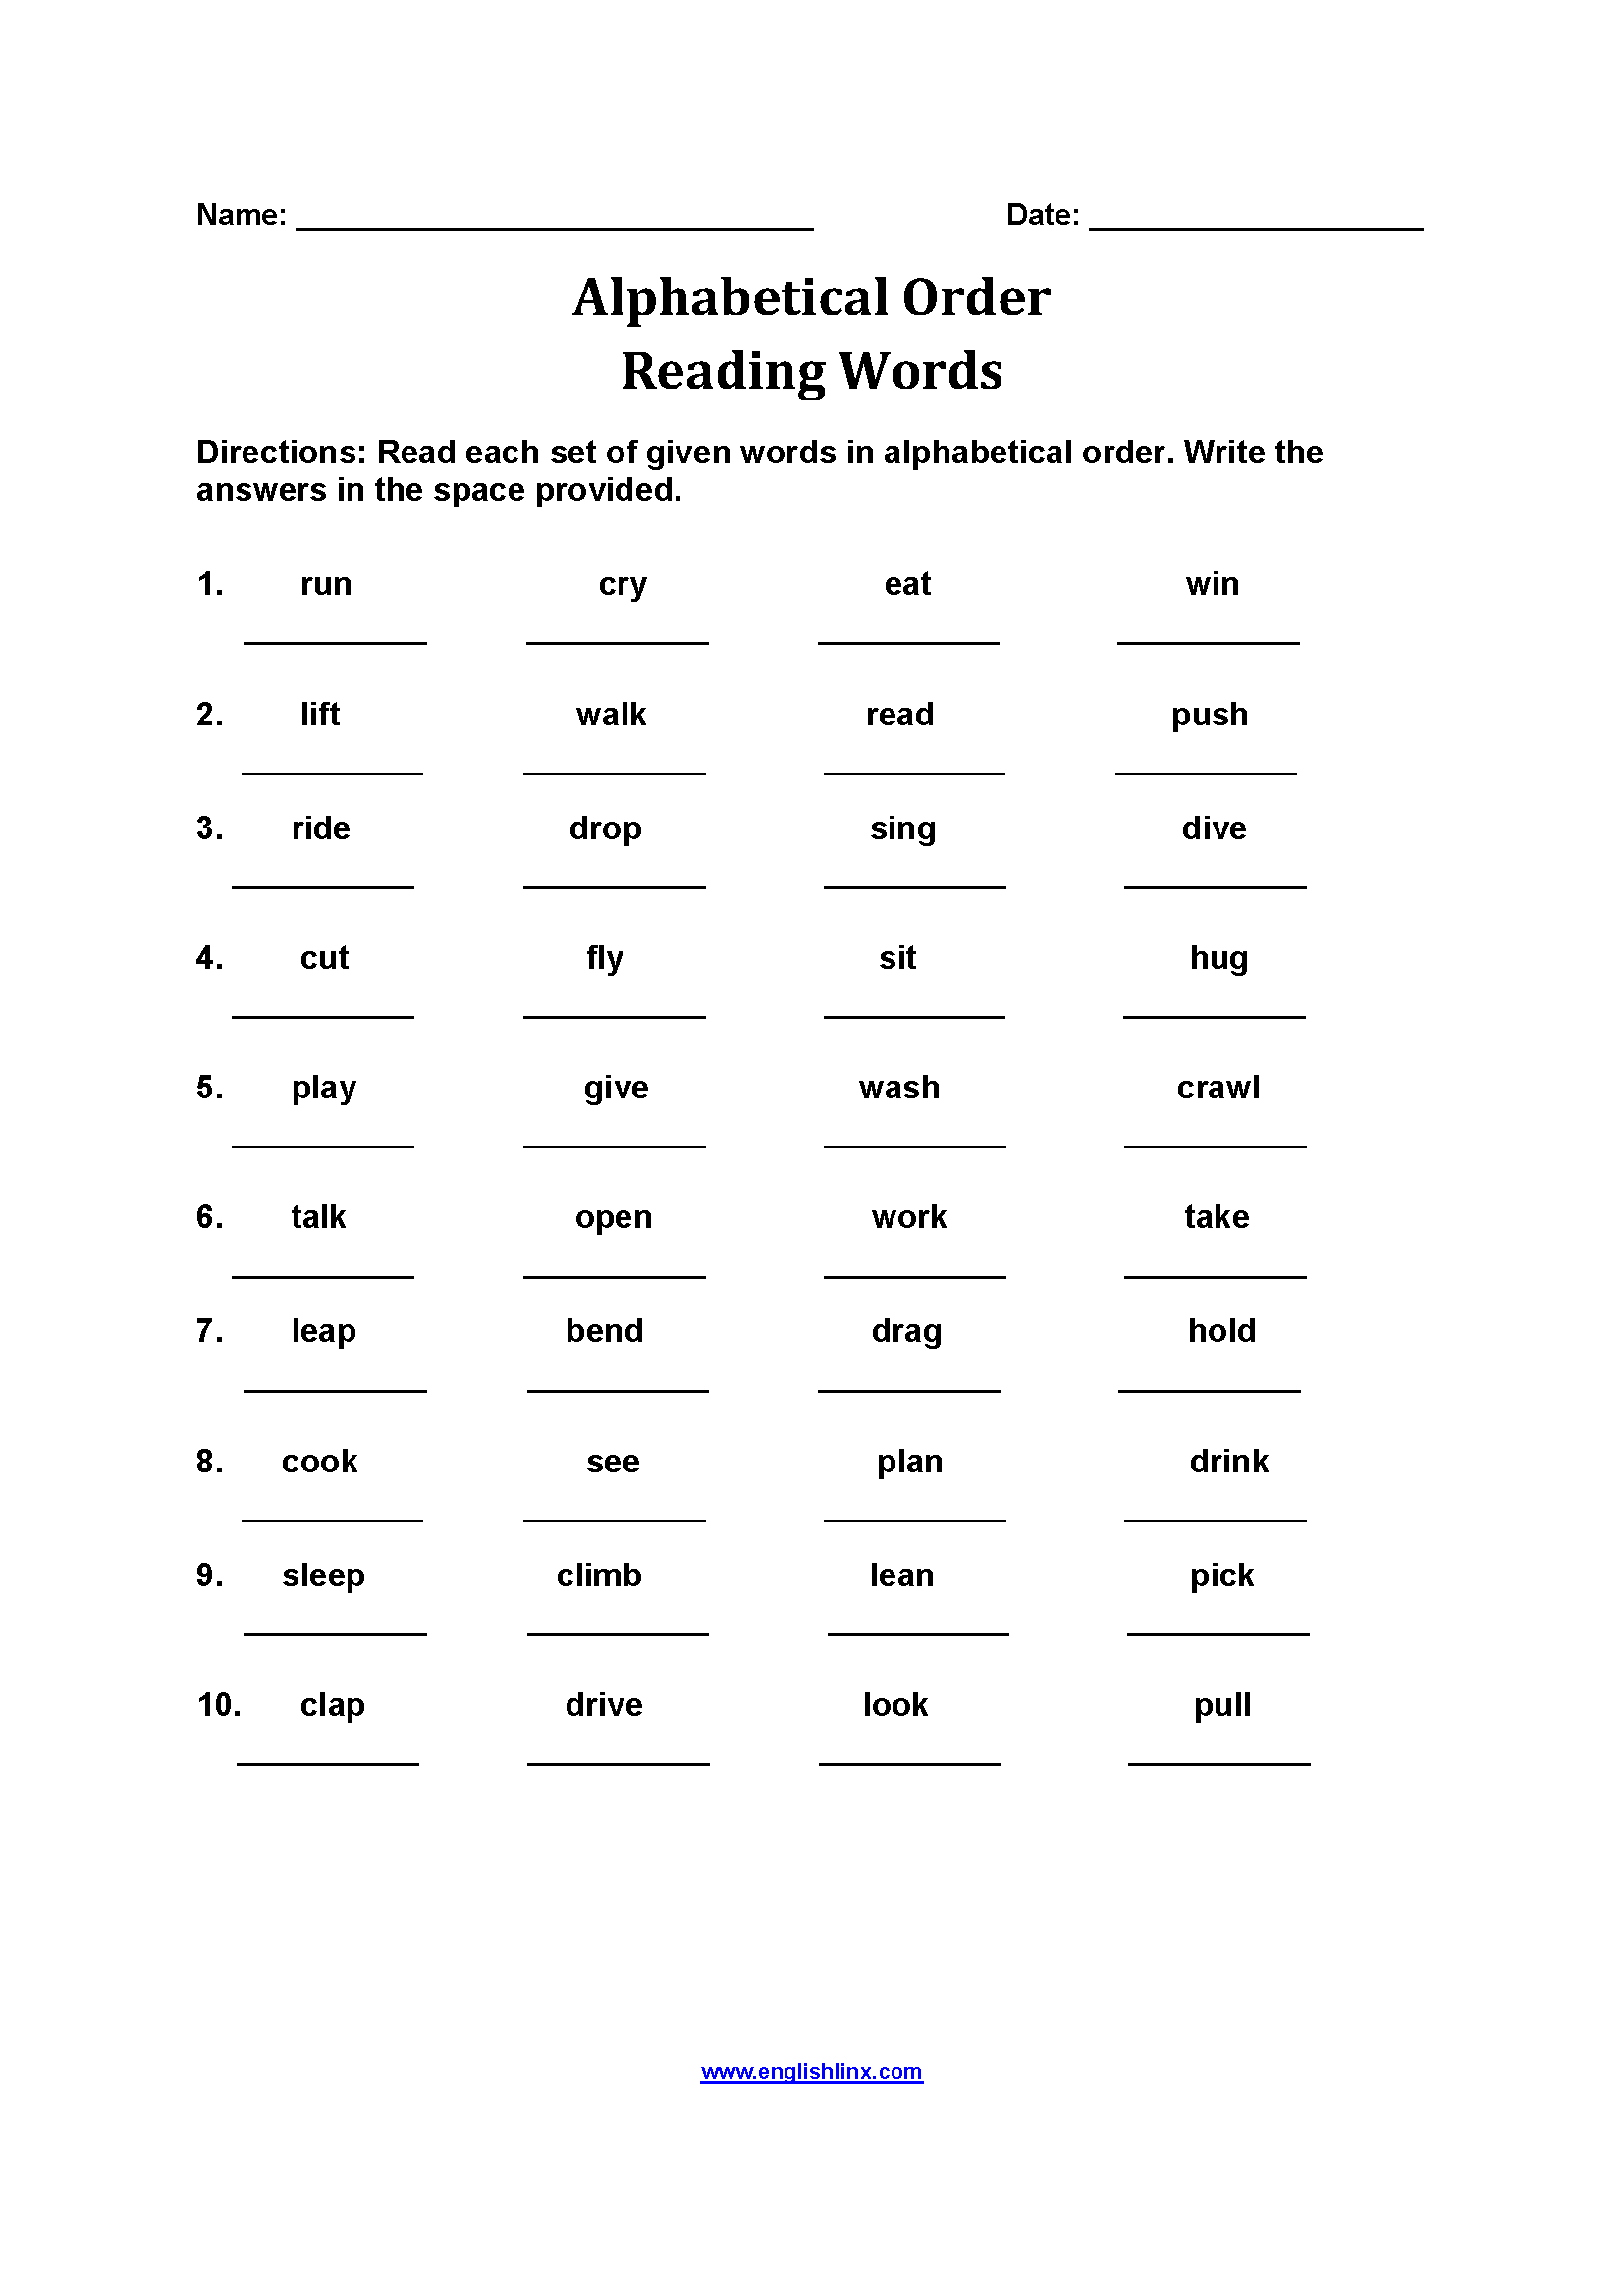 Reading Words Alphabetical Order Worksheets